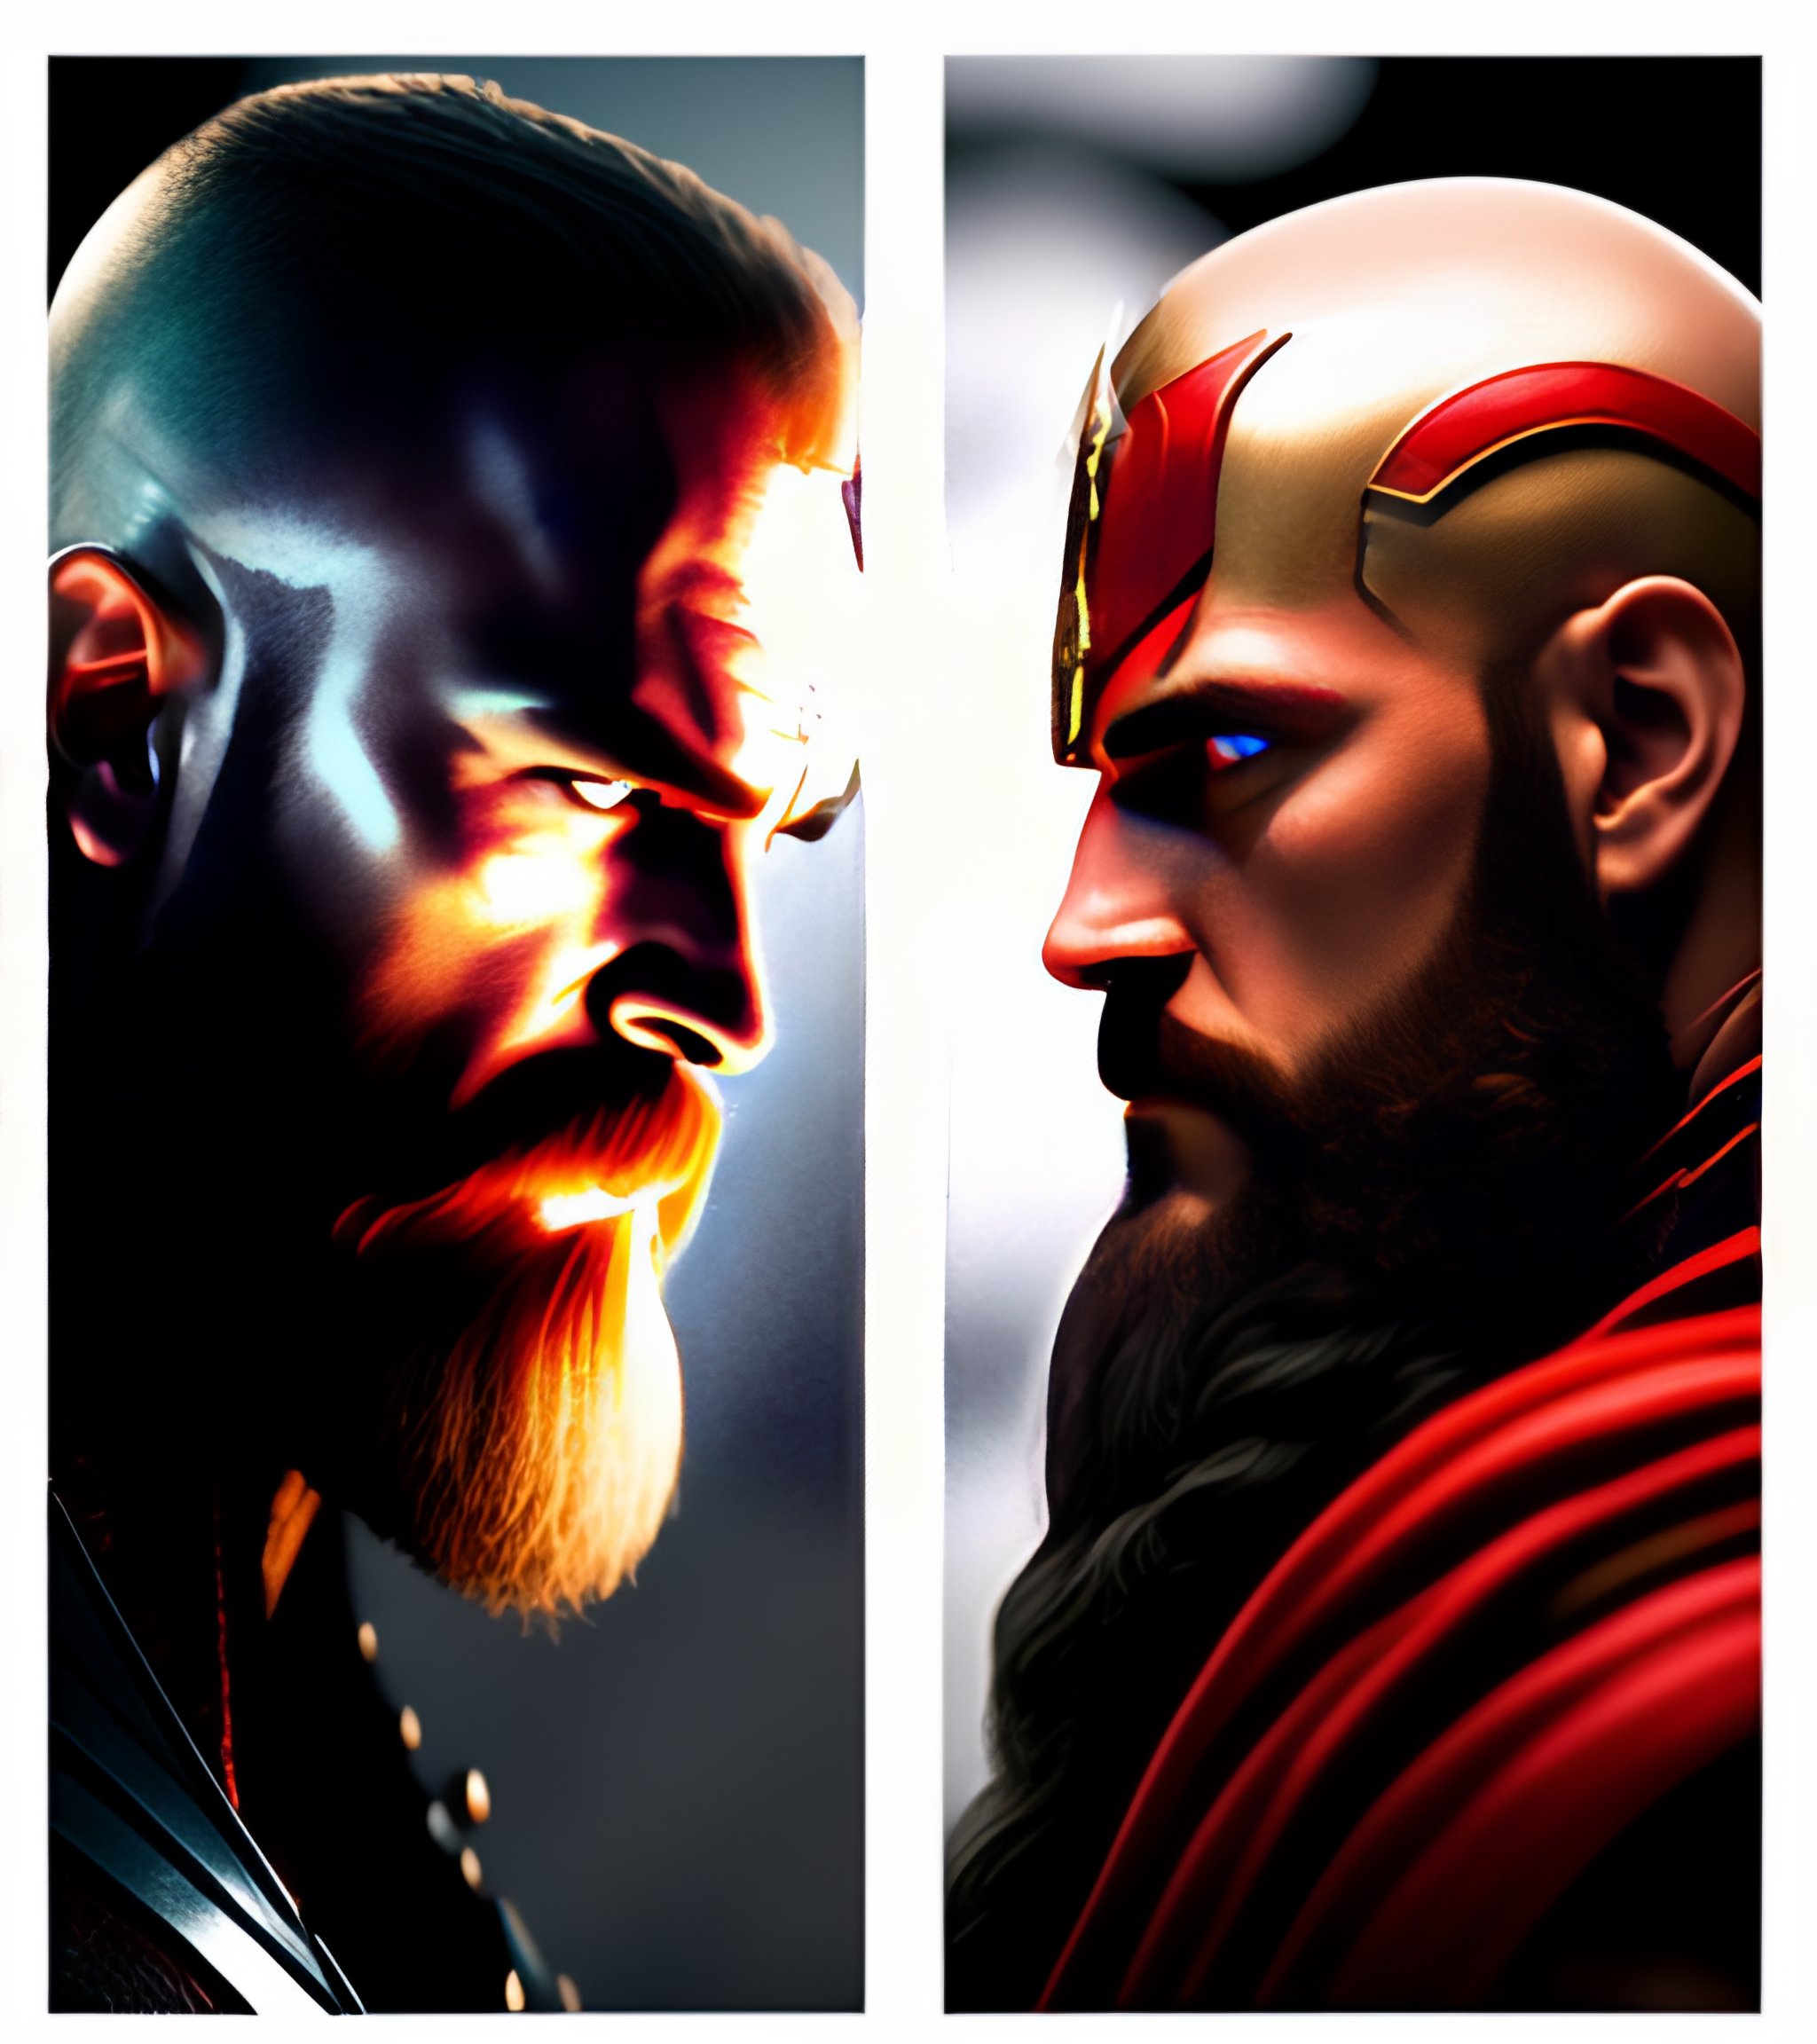 Thor vs kratos by lukavid on DeviantArt